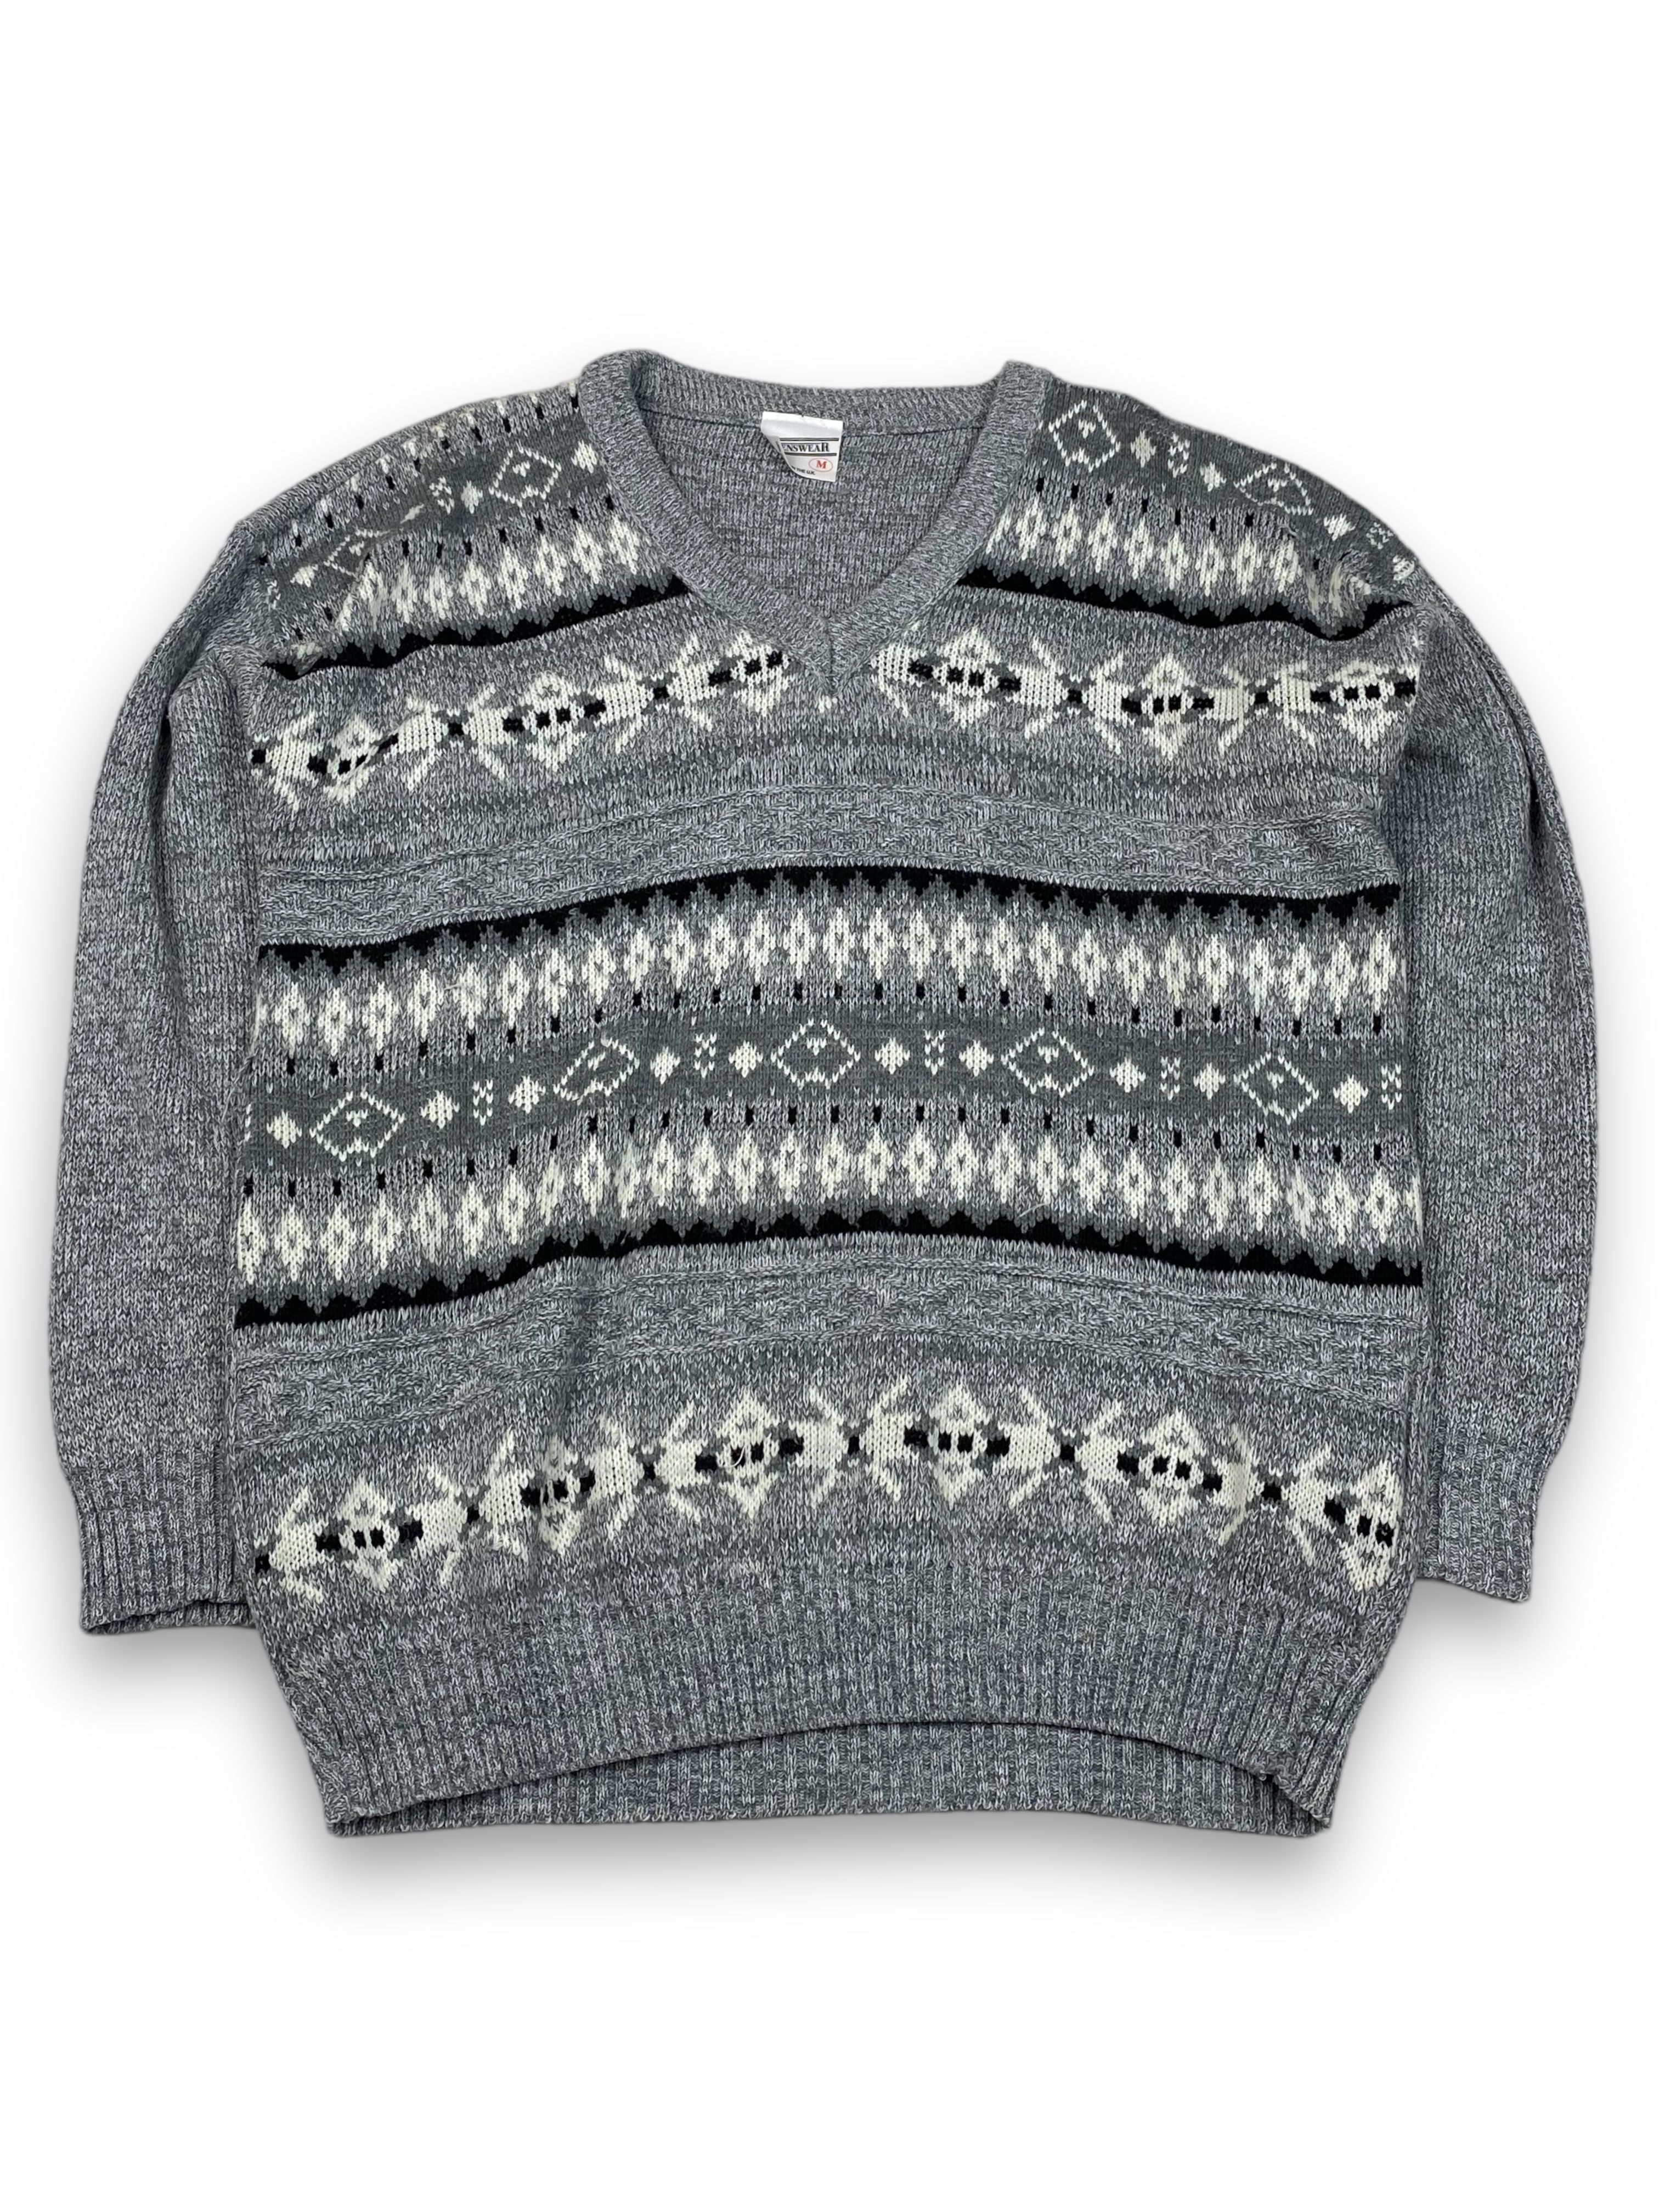 Pre-owned Avant Garde Vintage Menswear Crazy Print V-neck Sweater M691 In Grey